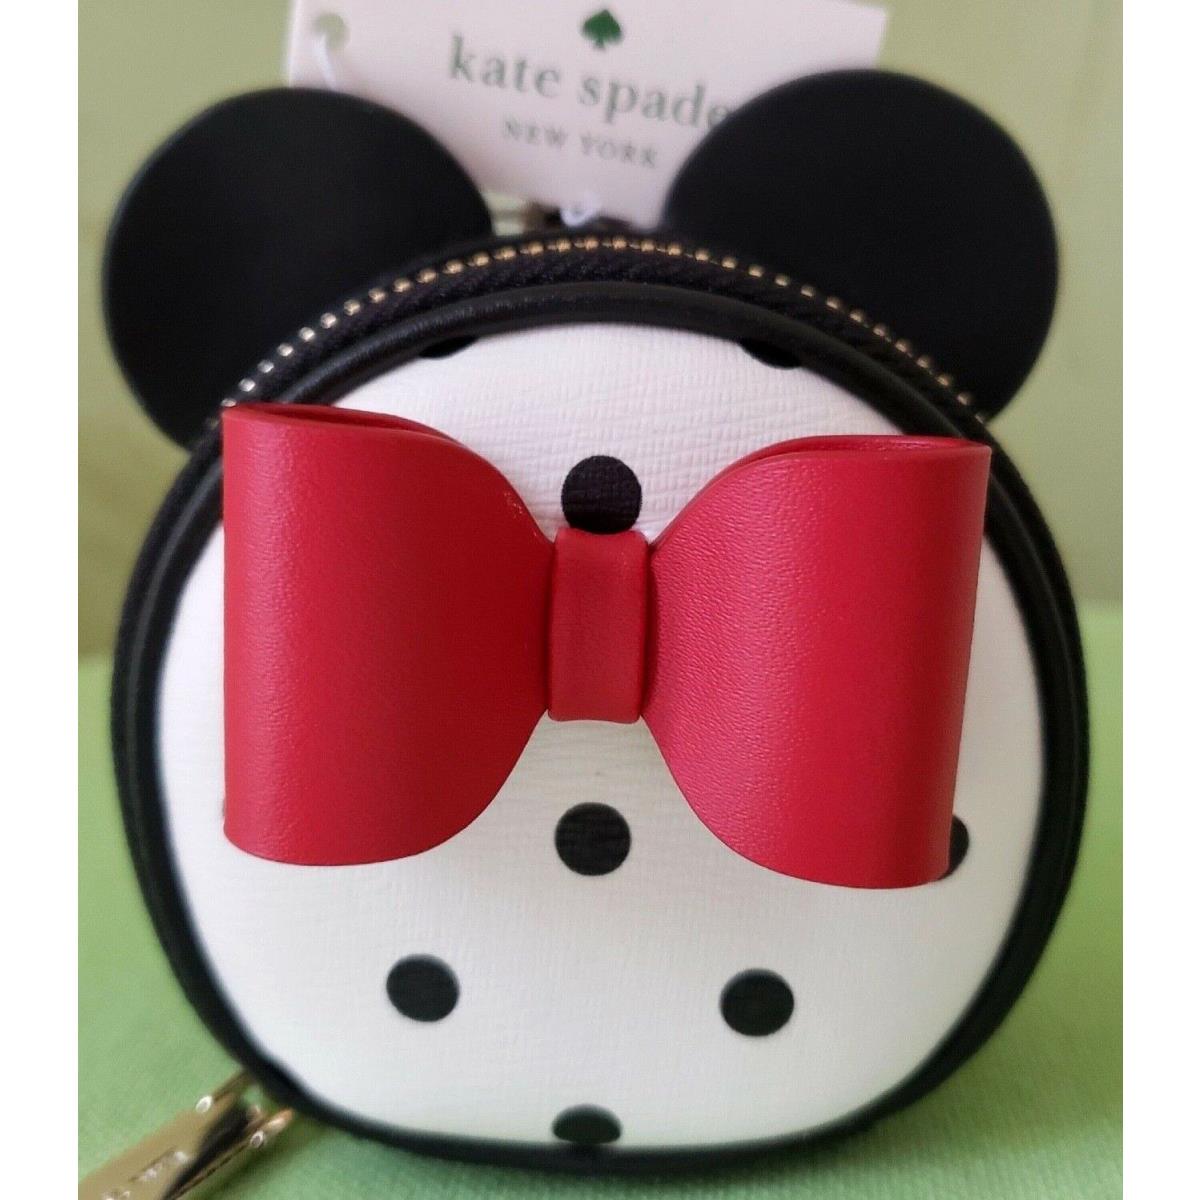 Kate Spade Disney Minnie Mouse Coin Purse Key Fob Bag Charm:nwt